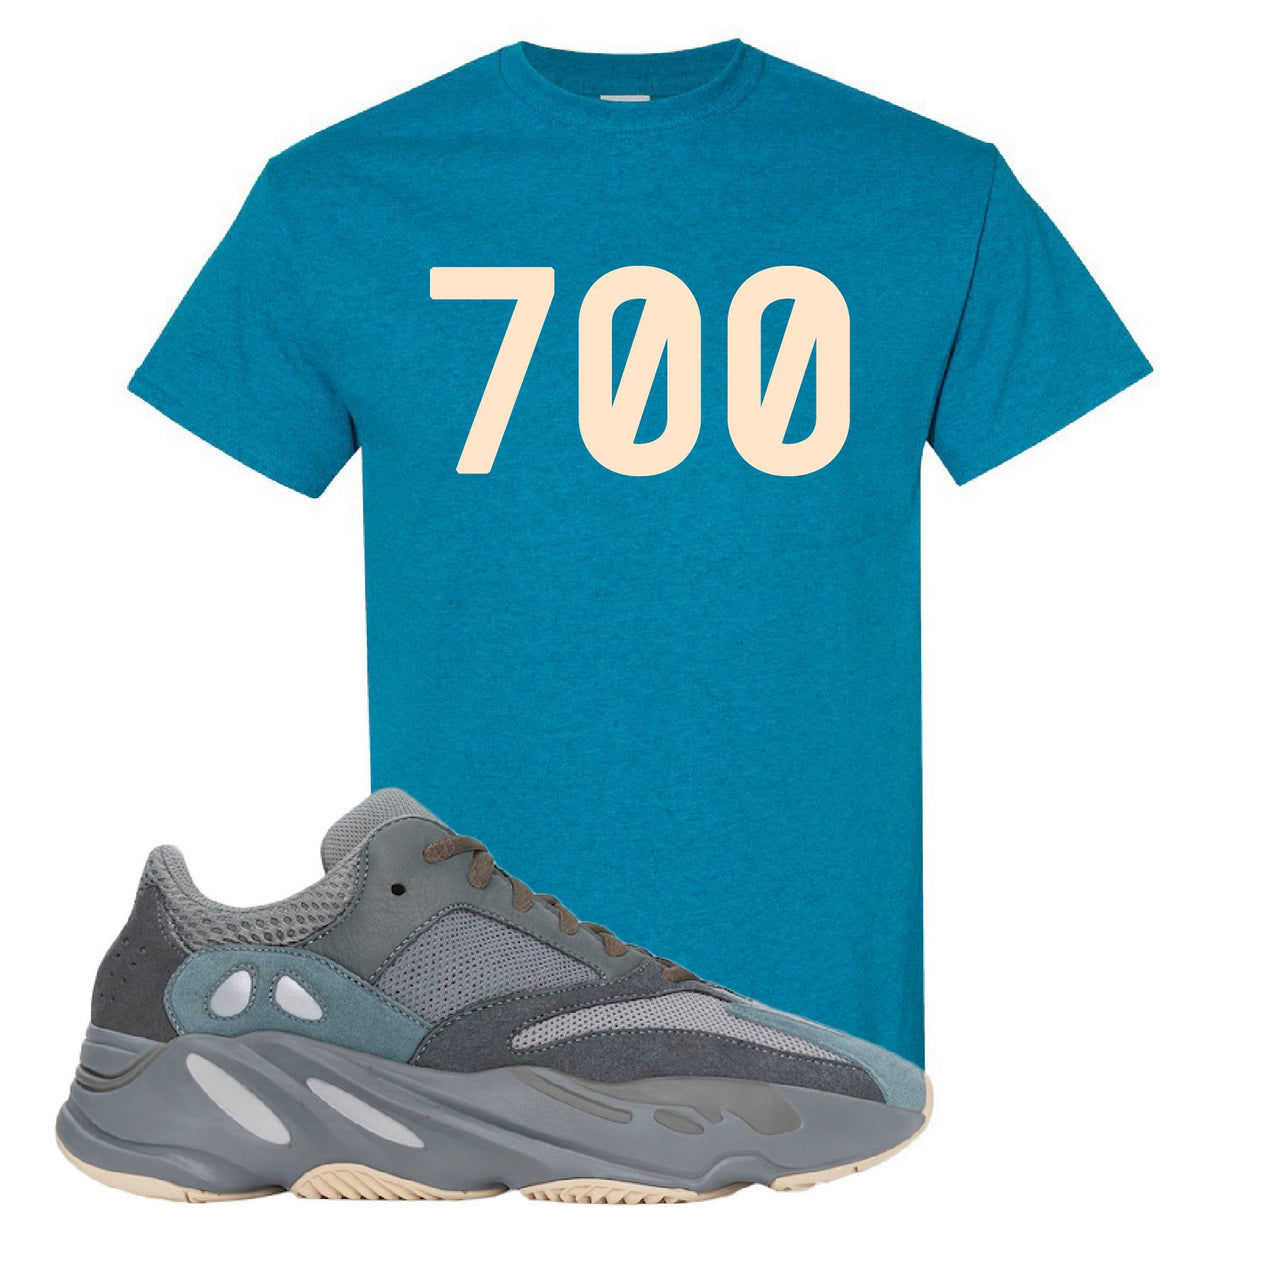 Yeezy Boost 700 Teal Blue 700 Antique Saphire Sneaker Hook Up T-Shirt